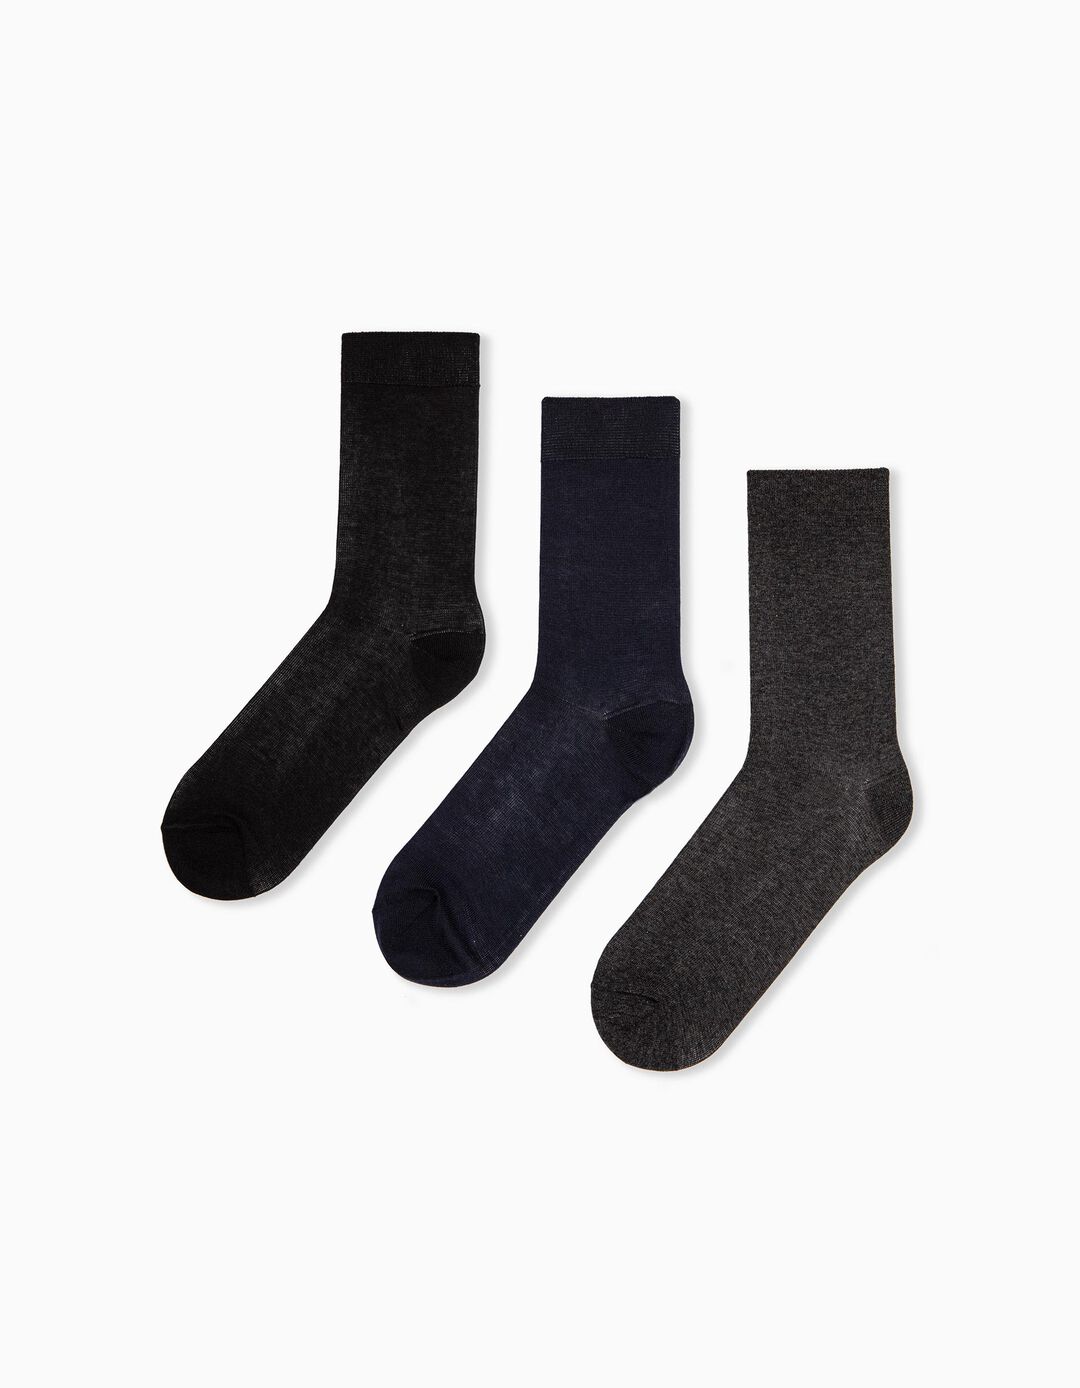 3 Pairs of Cotton Socks for Men, Black